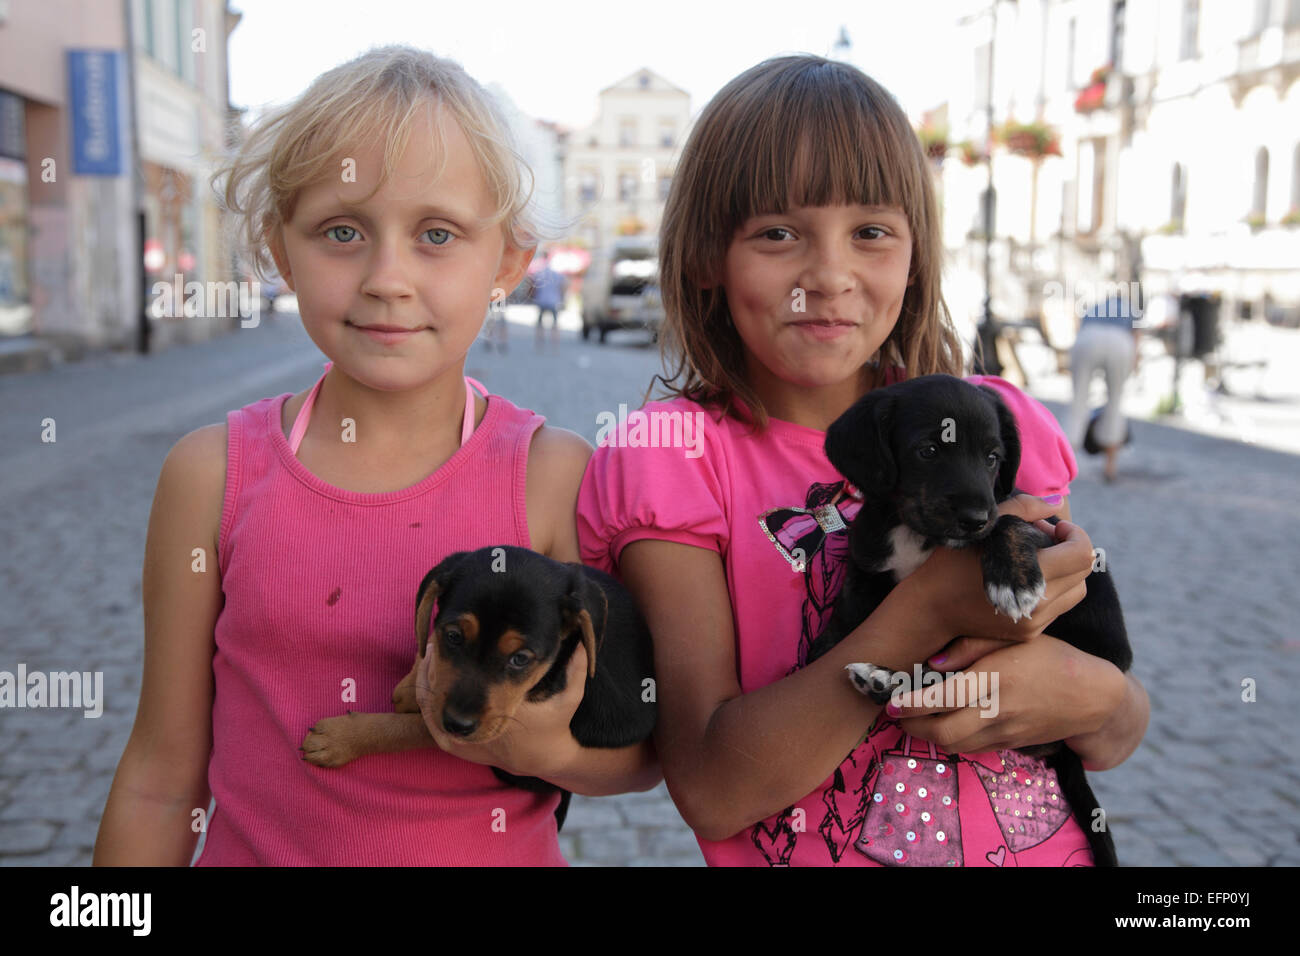 Young girls with dogs, Ladek Zdroj (Bad Landeck), Silesia, Poland, Europe Stock Photo